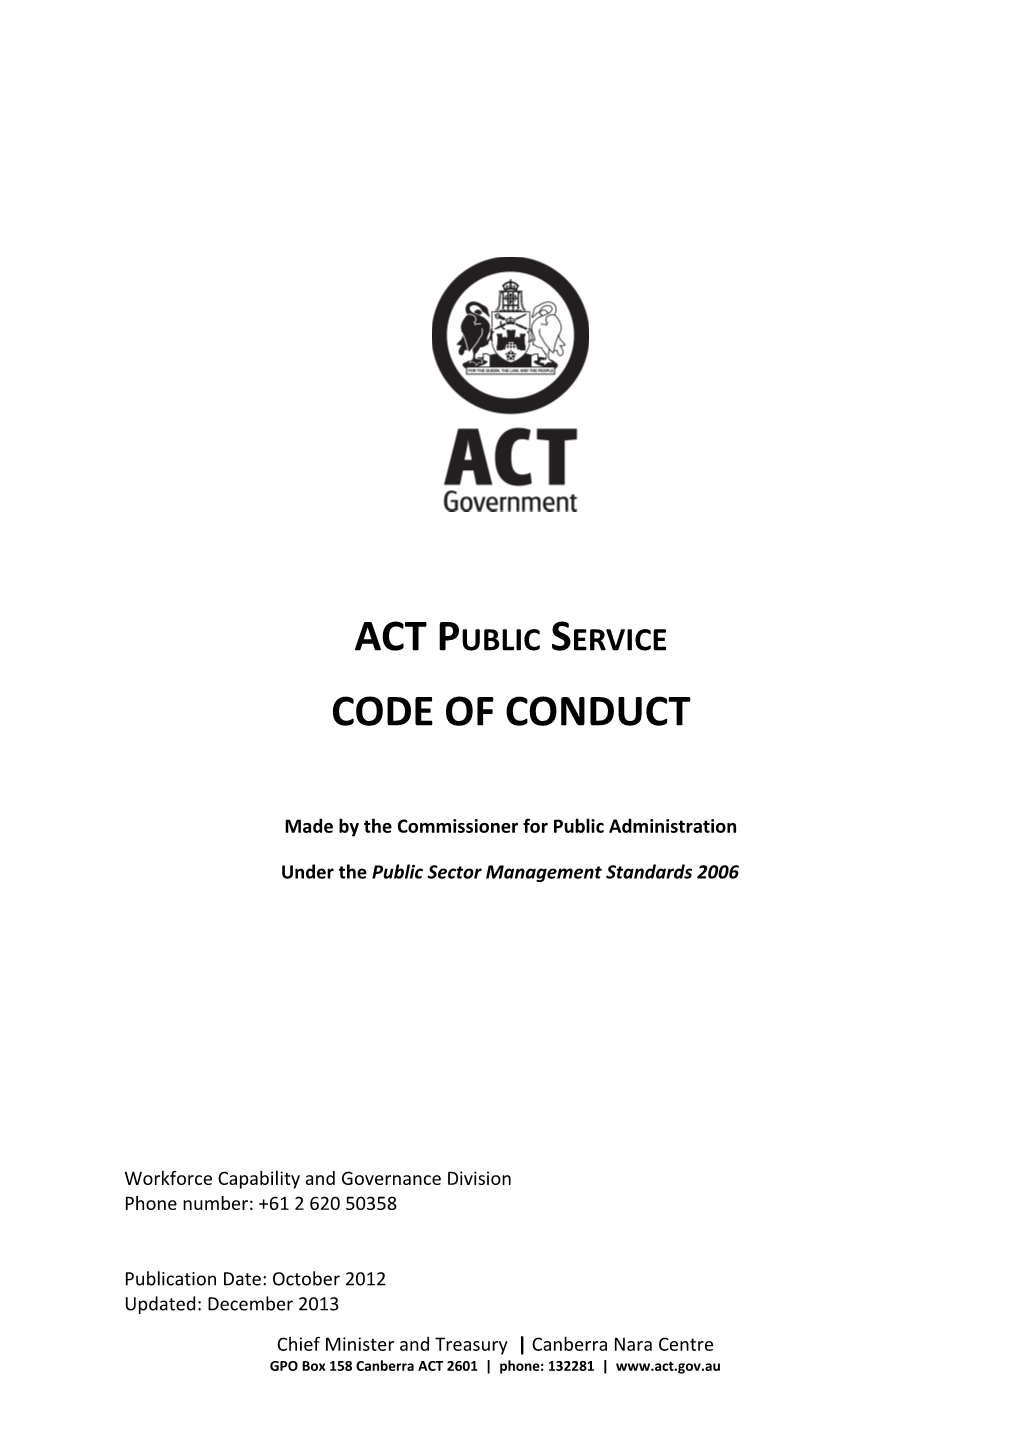 ACTPS Code of Conduct 2012